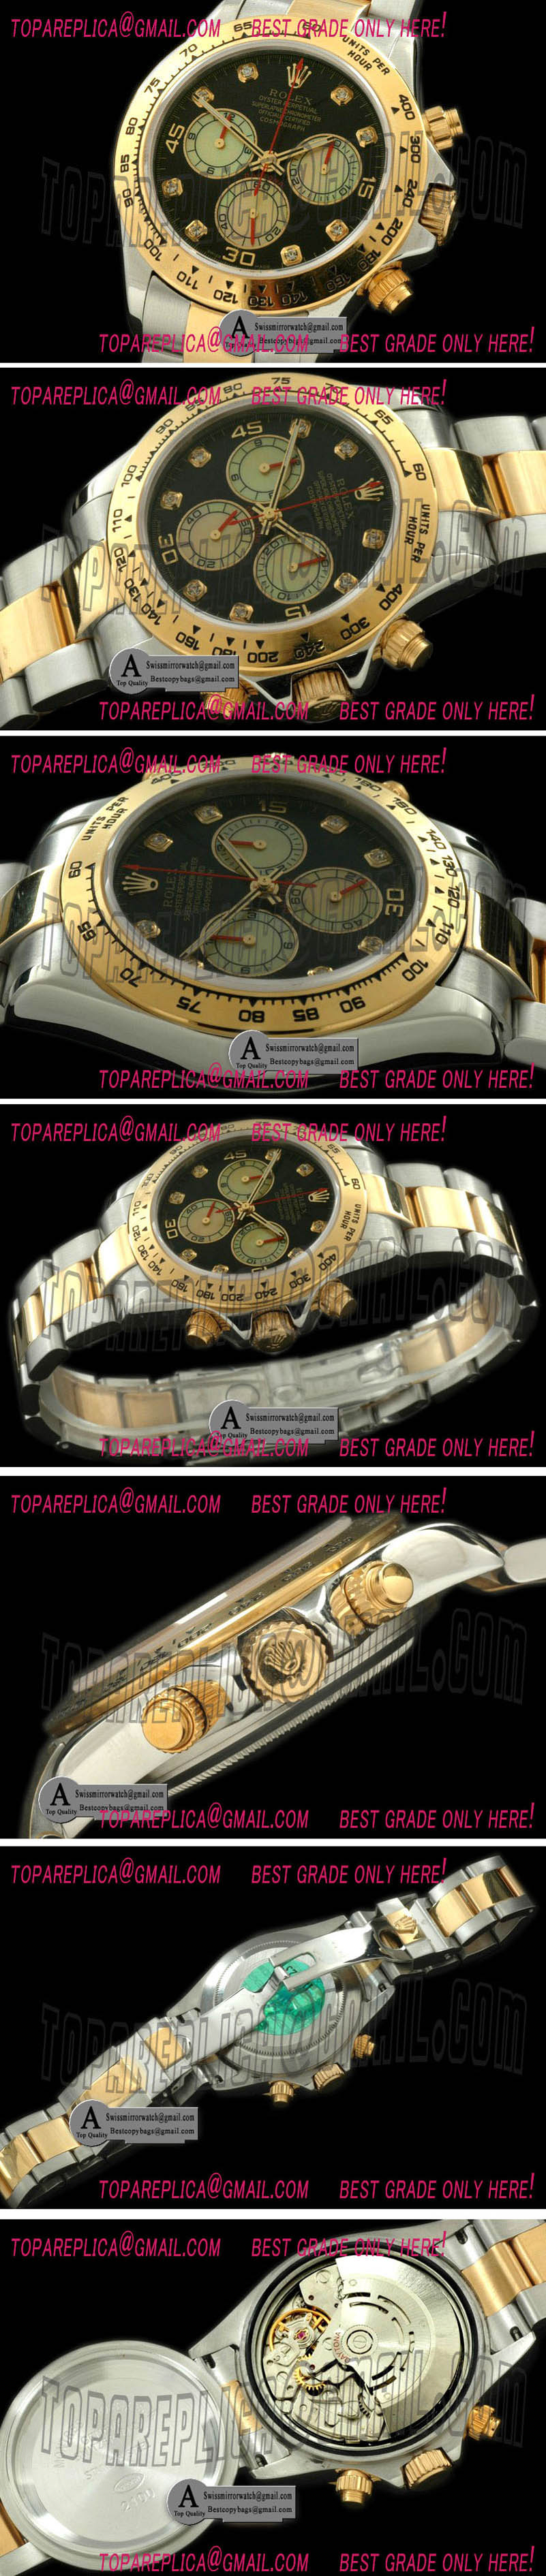 Rolex Daytona 2011 SS Yellow Gold Black White Diamond A 7750 Sec@6 28800 Replica Watches